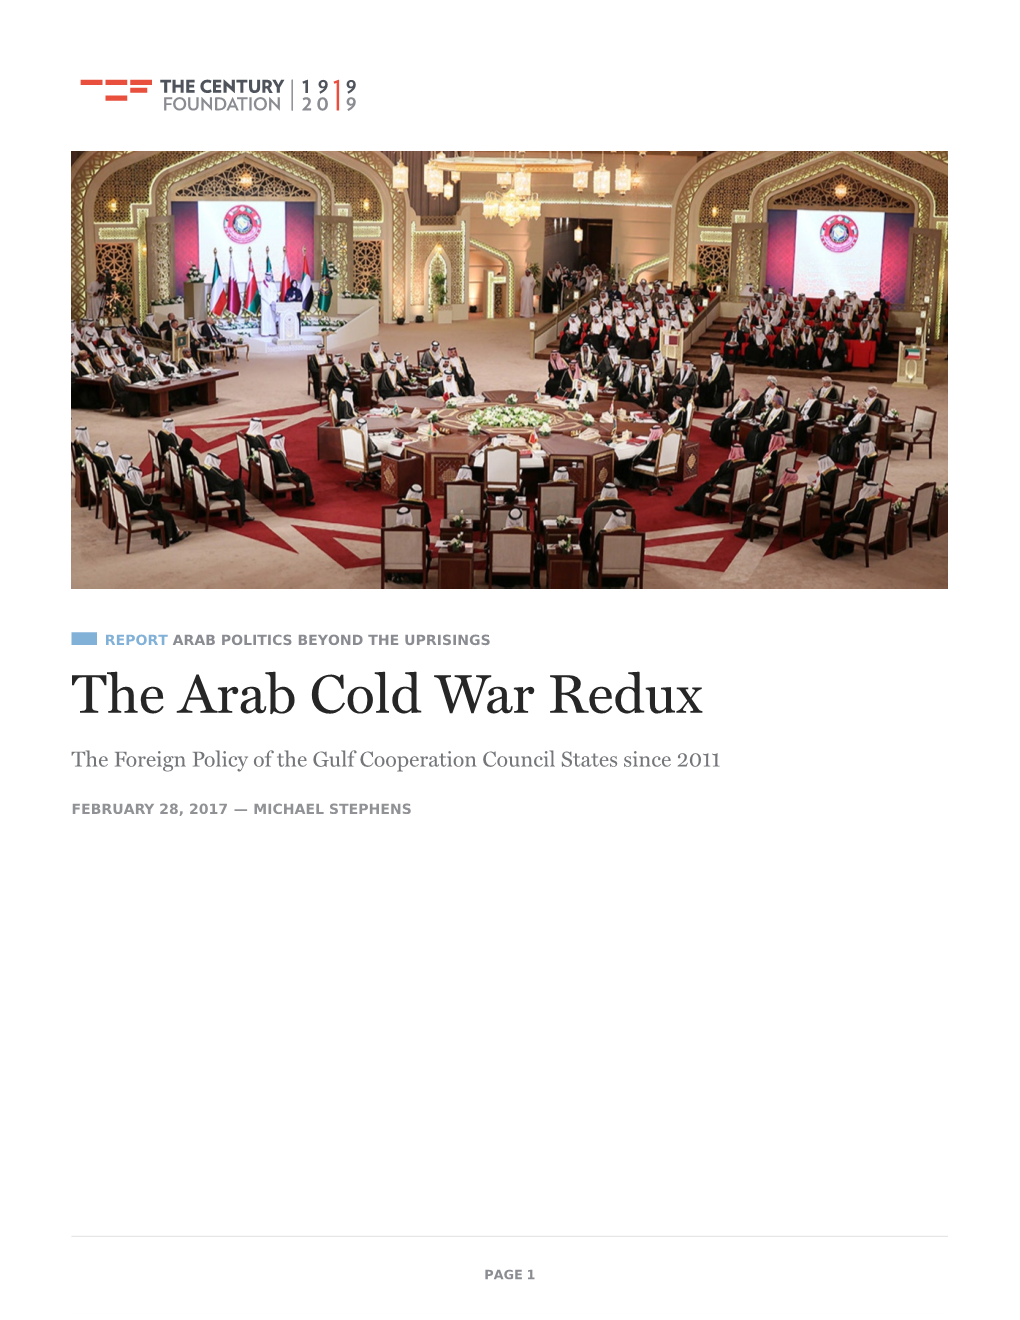 The Arab Cold War Redux